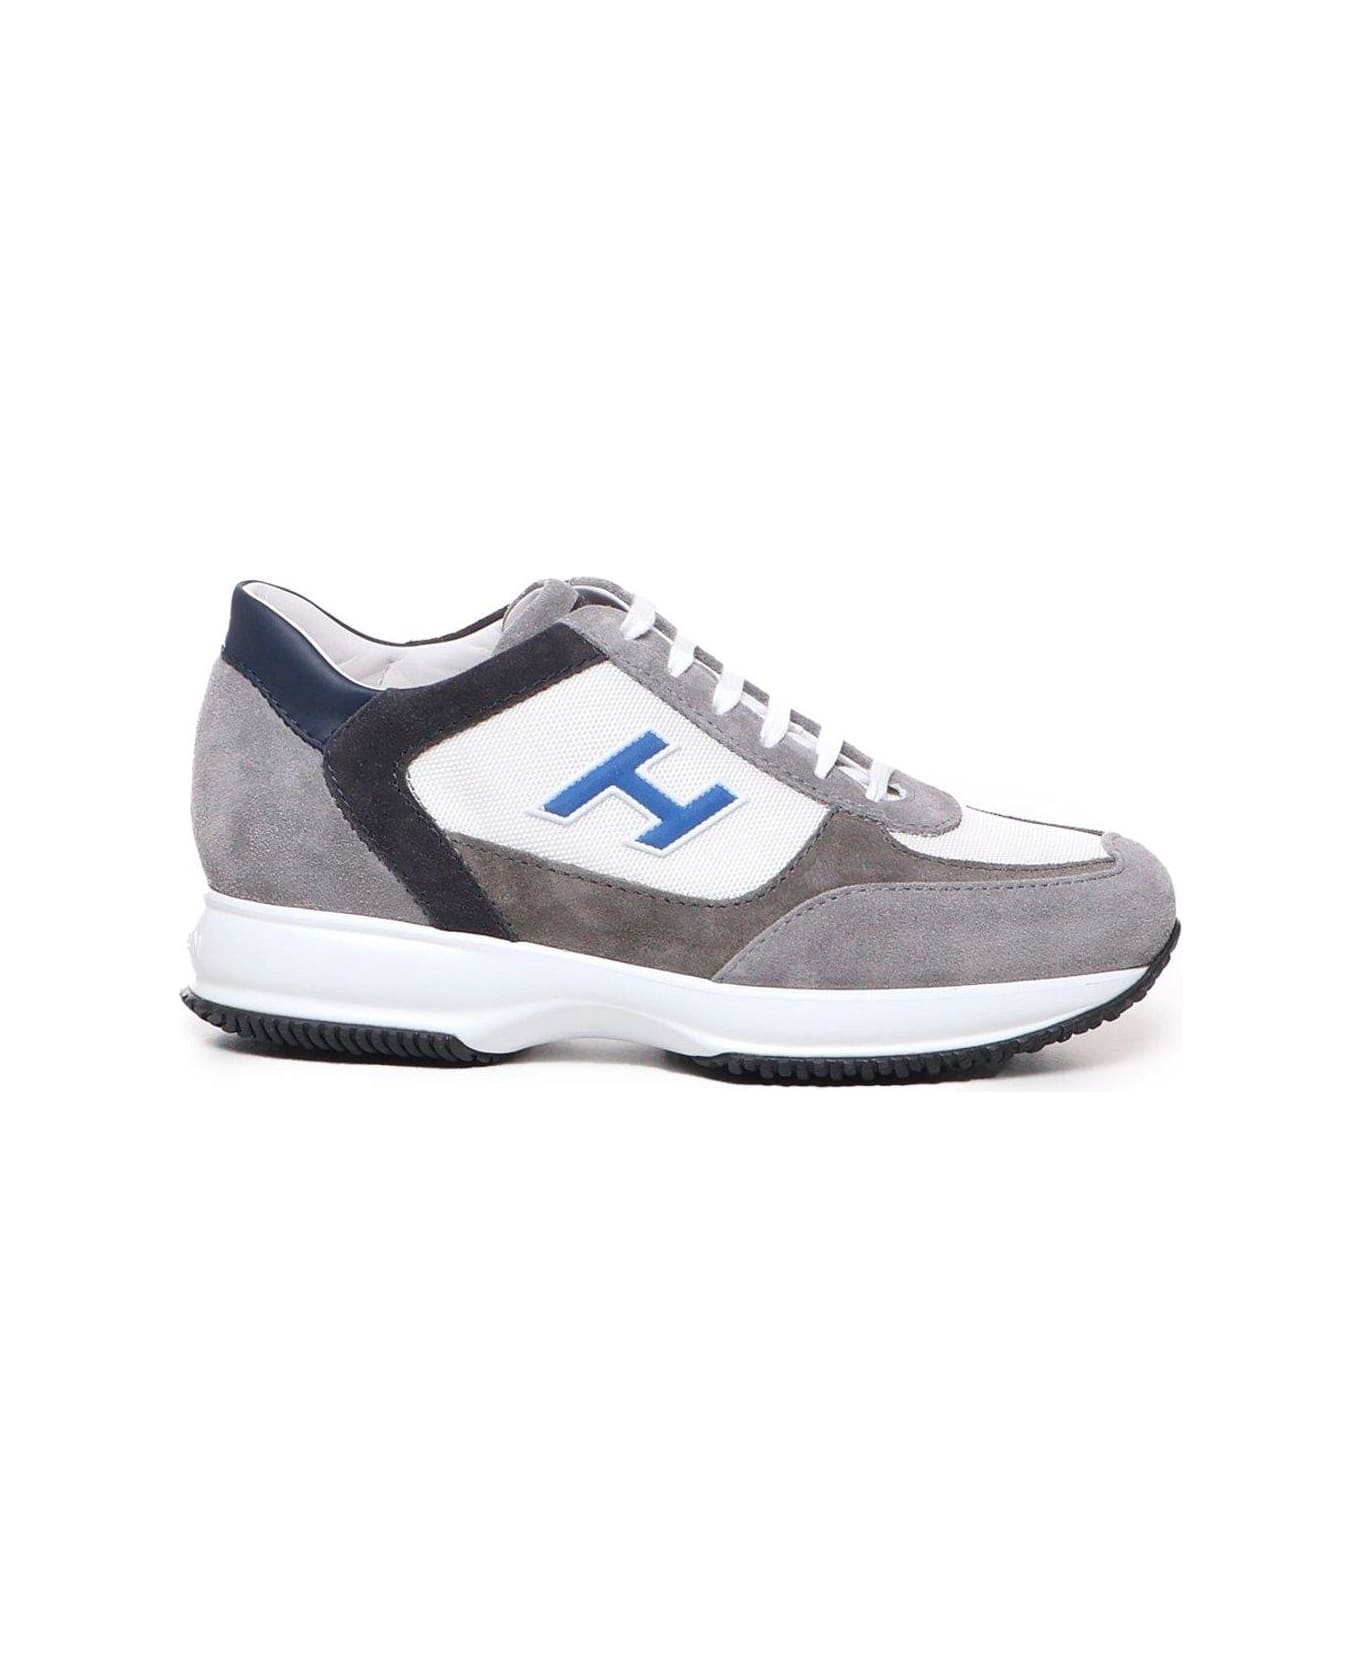 Hogan Interactive Lace-up Sneakers - Grigio/bianco スニーカー